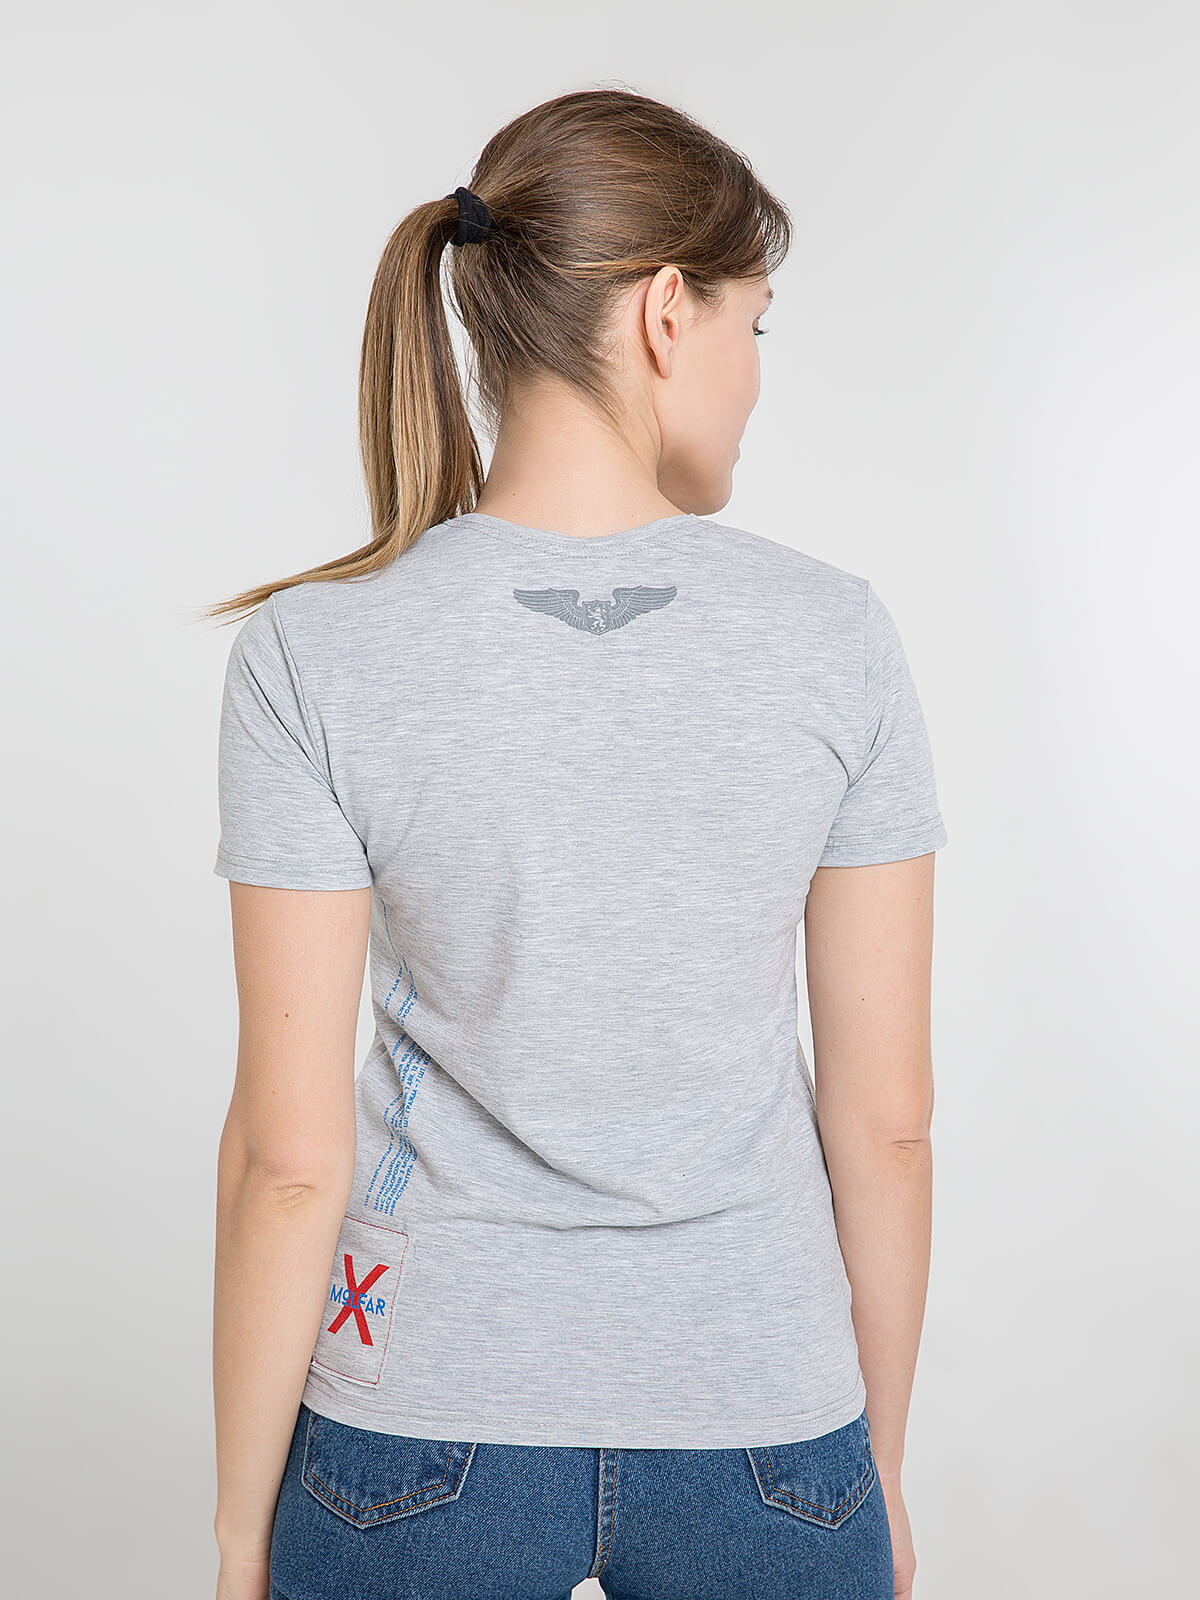 Women's T-Shirt Wjo Na Mars. Color gray. 
Technique of prints applied: silkscreen printing.